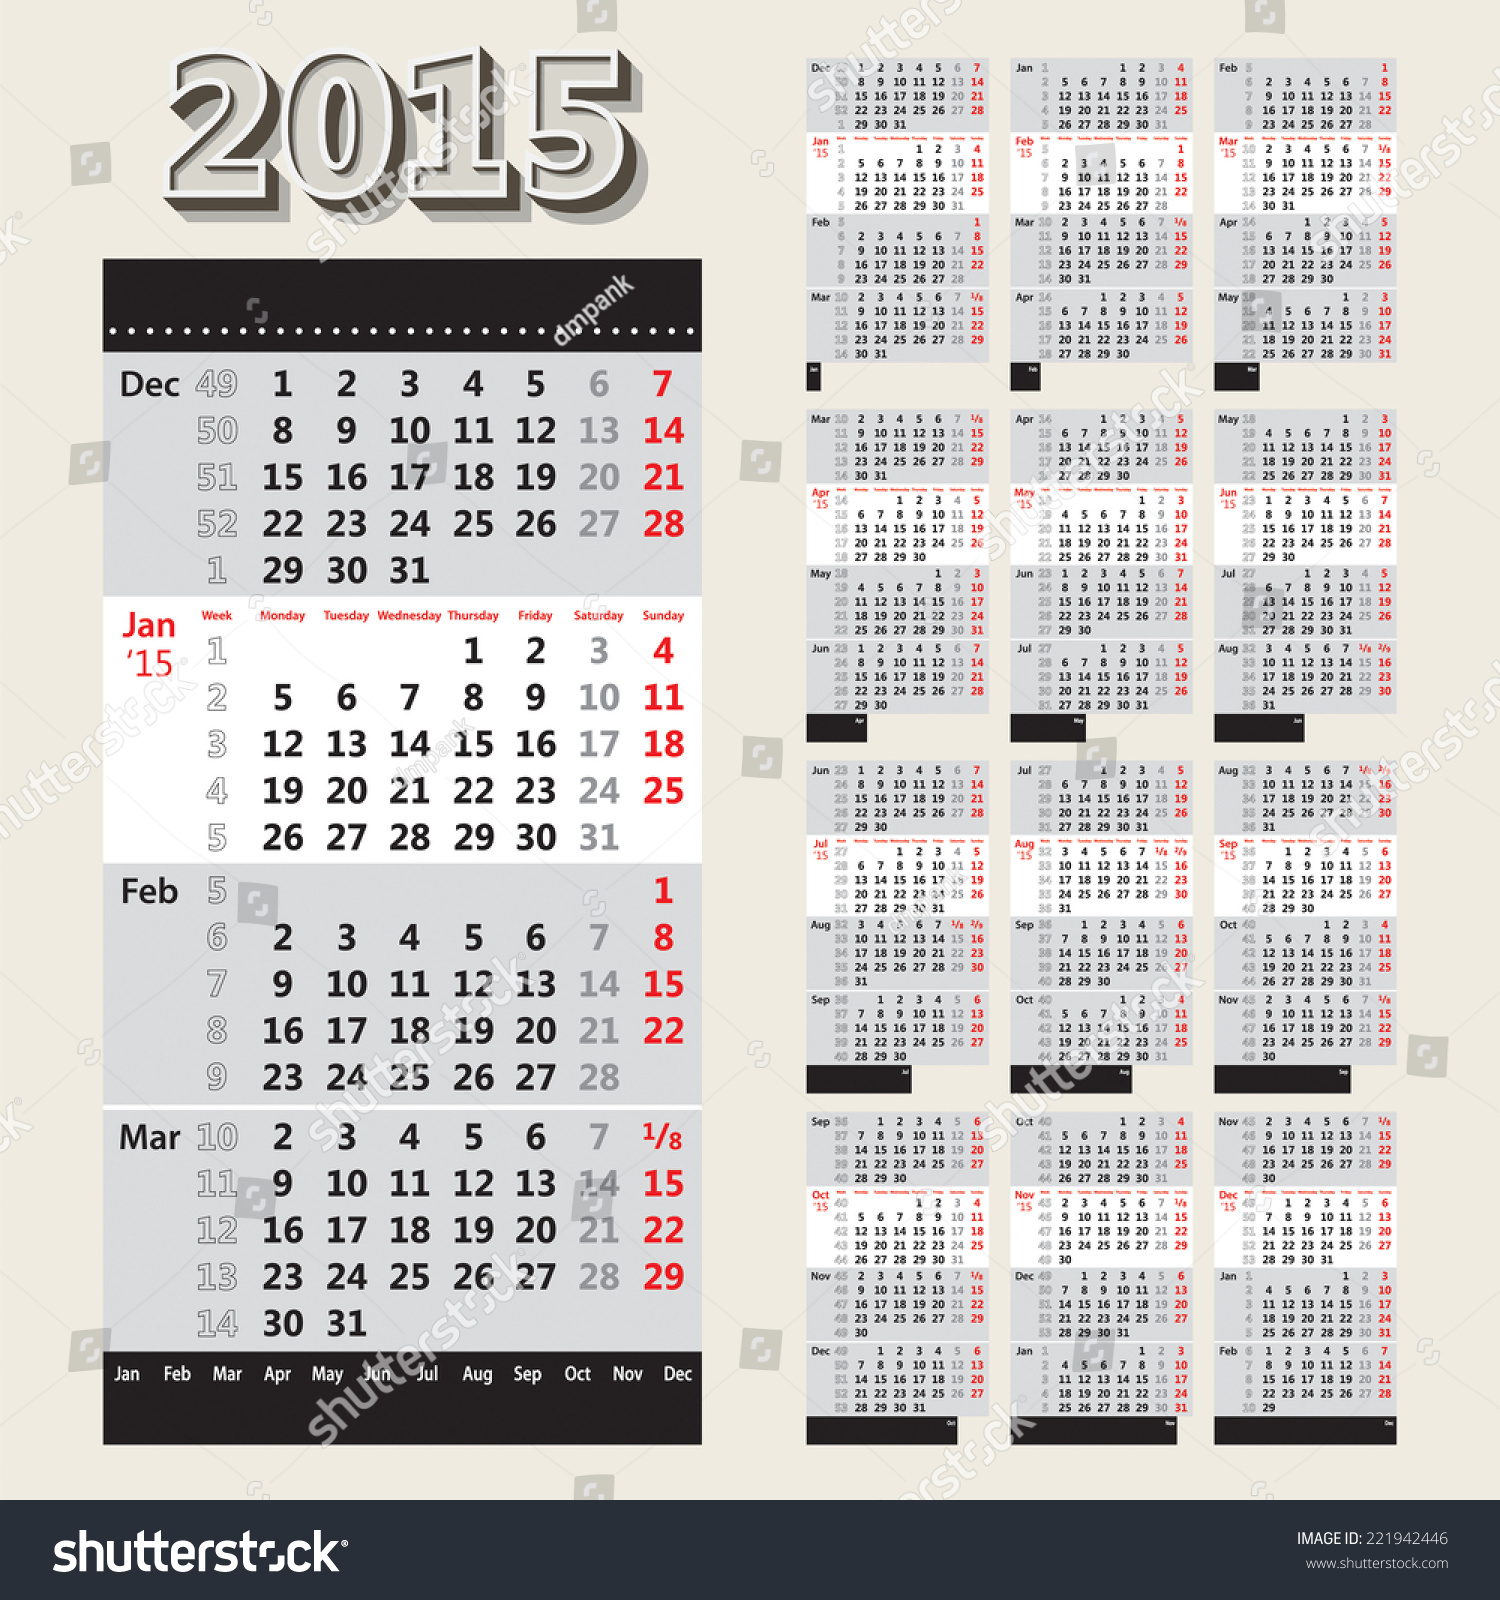 2015 European Style Calendar Grid With Week Numbers (4 Month View